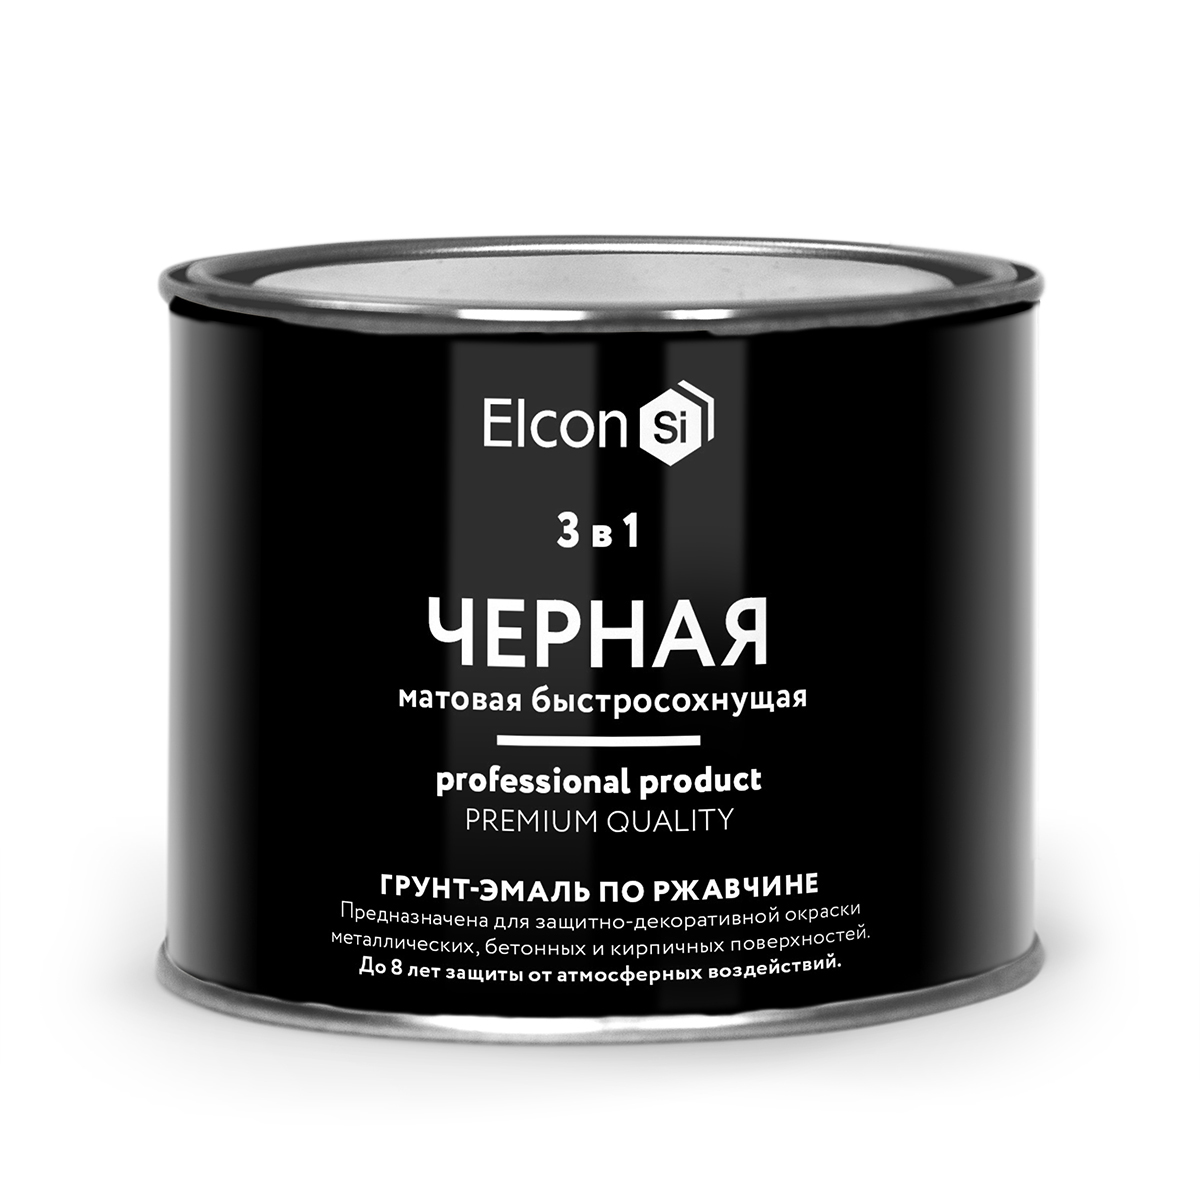 Грунт-эмаль по ржавчине Elcon 3 в 1, матовая, 0,4 кг, RAL 9005, черная грунт эмаль decotech 3в1 черная под ral9005 1 8кг